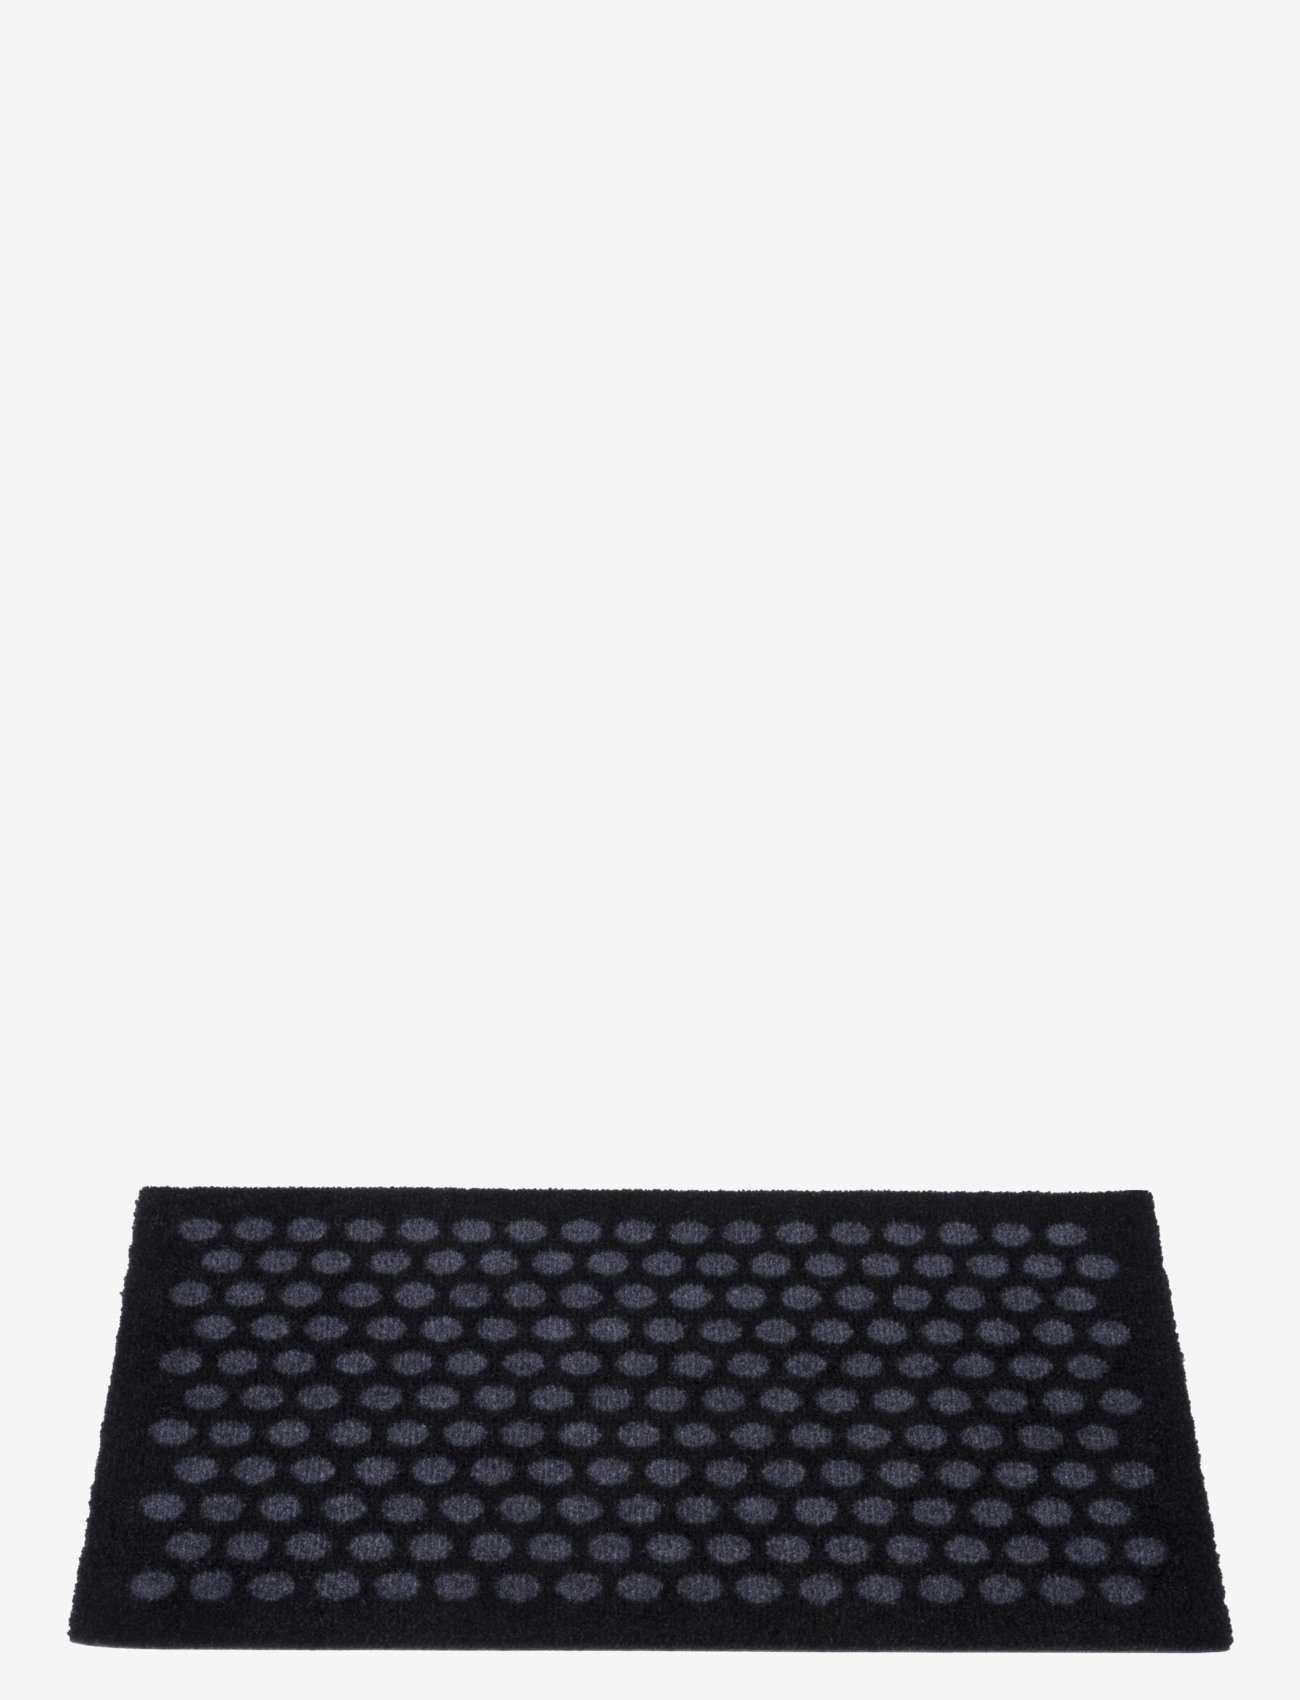 tica copenhagen - Floormat polyamide, 60x40 cm, dot design - laveste priser - black/grey - 1